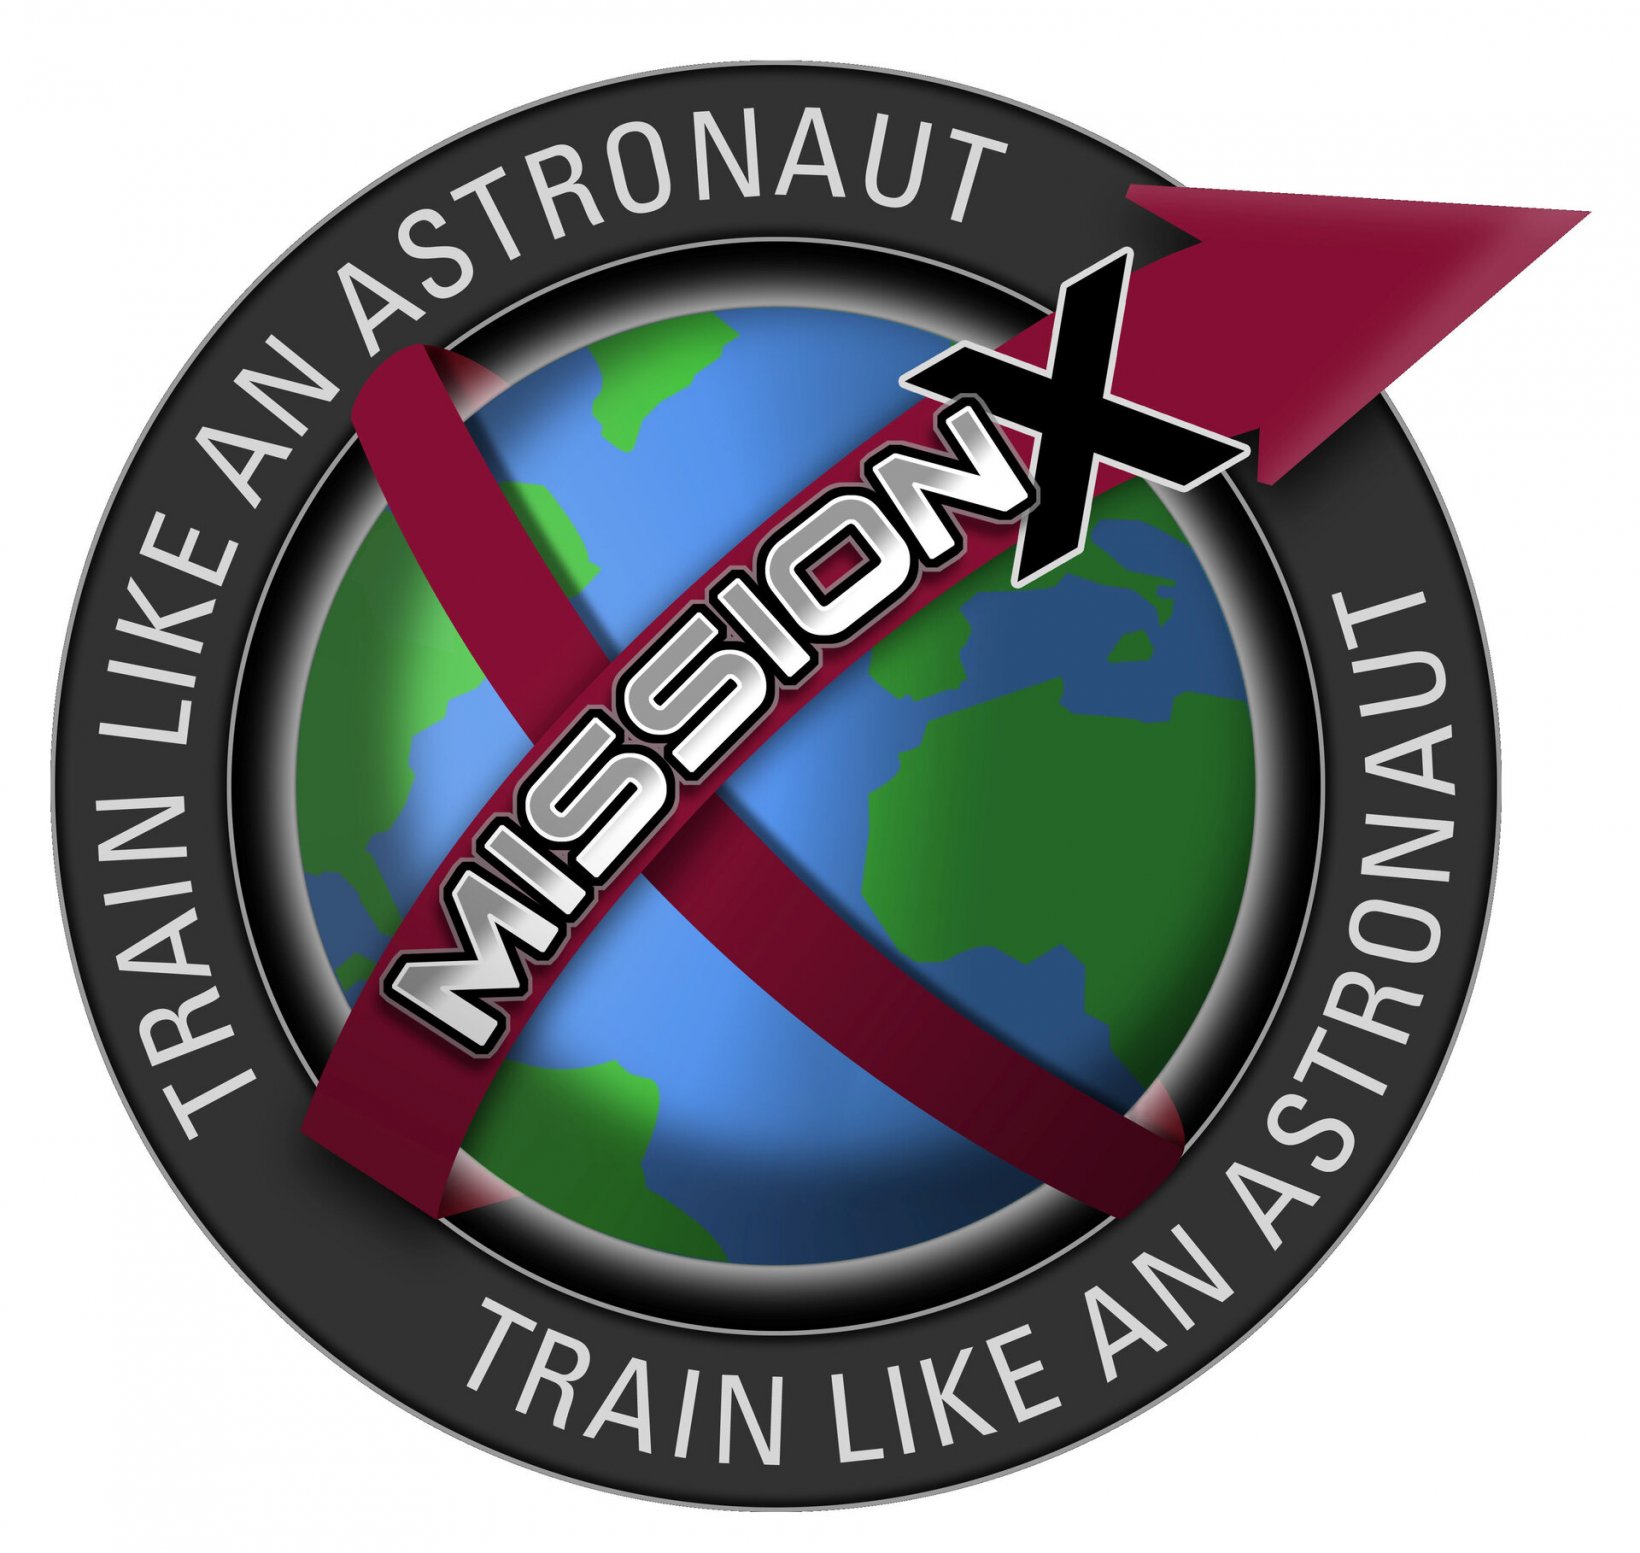 Mission X logo pillars